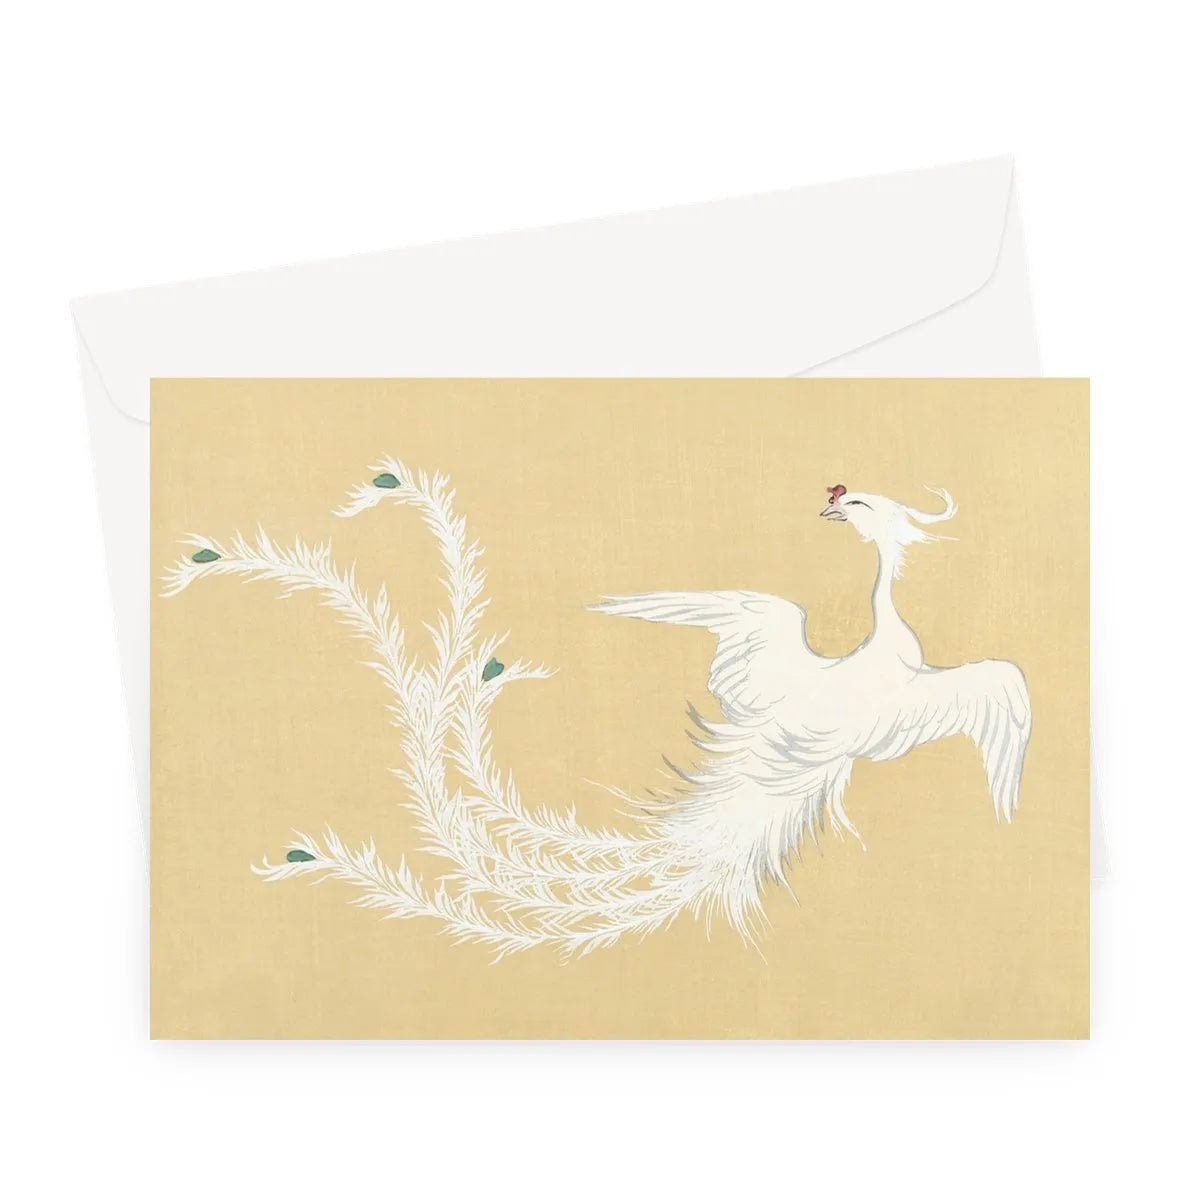 Phoenix By Kamisaka Sekka Greeting Card - A5 Landscape / 1 Card - Greeting & Note Cards - Aesthetic Art